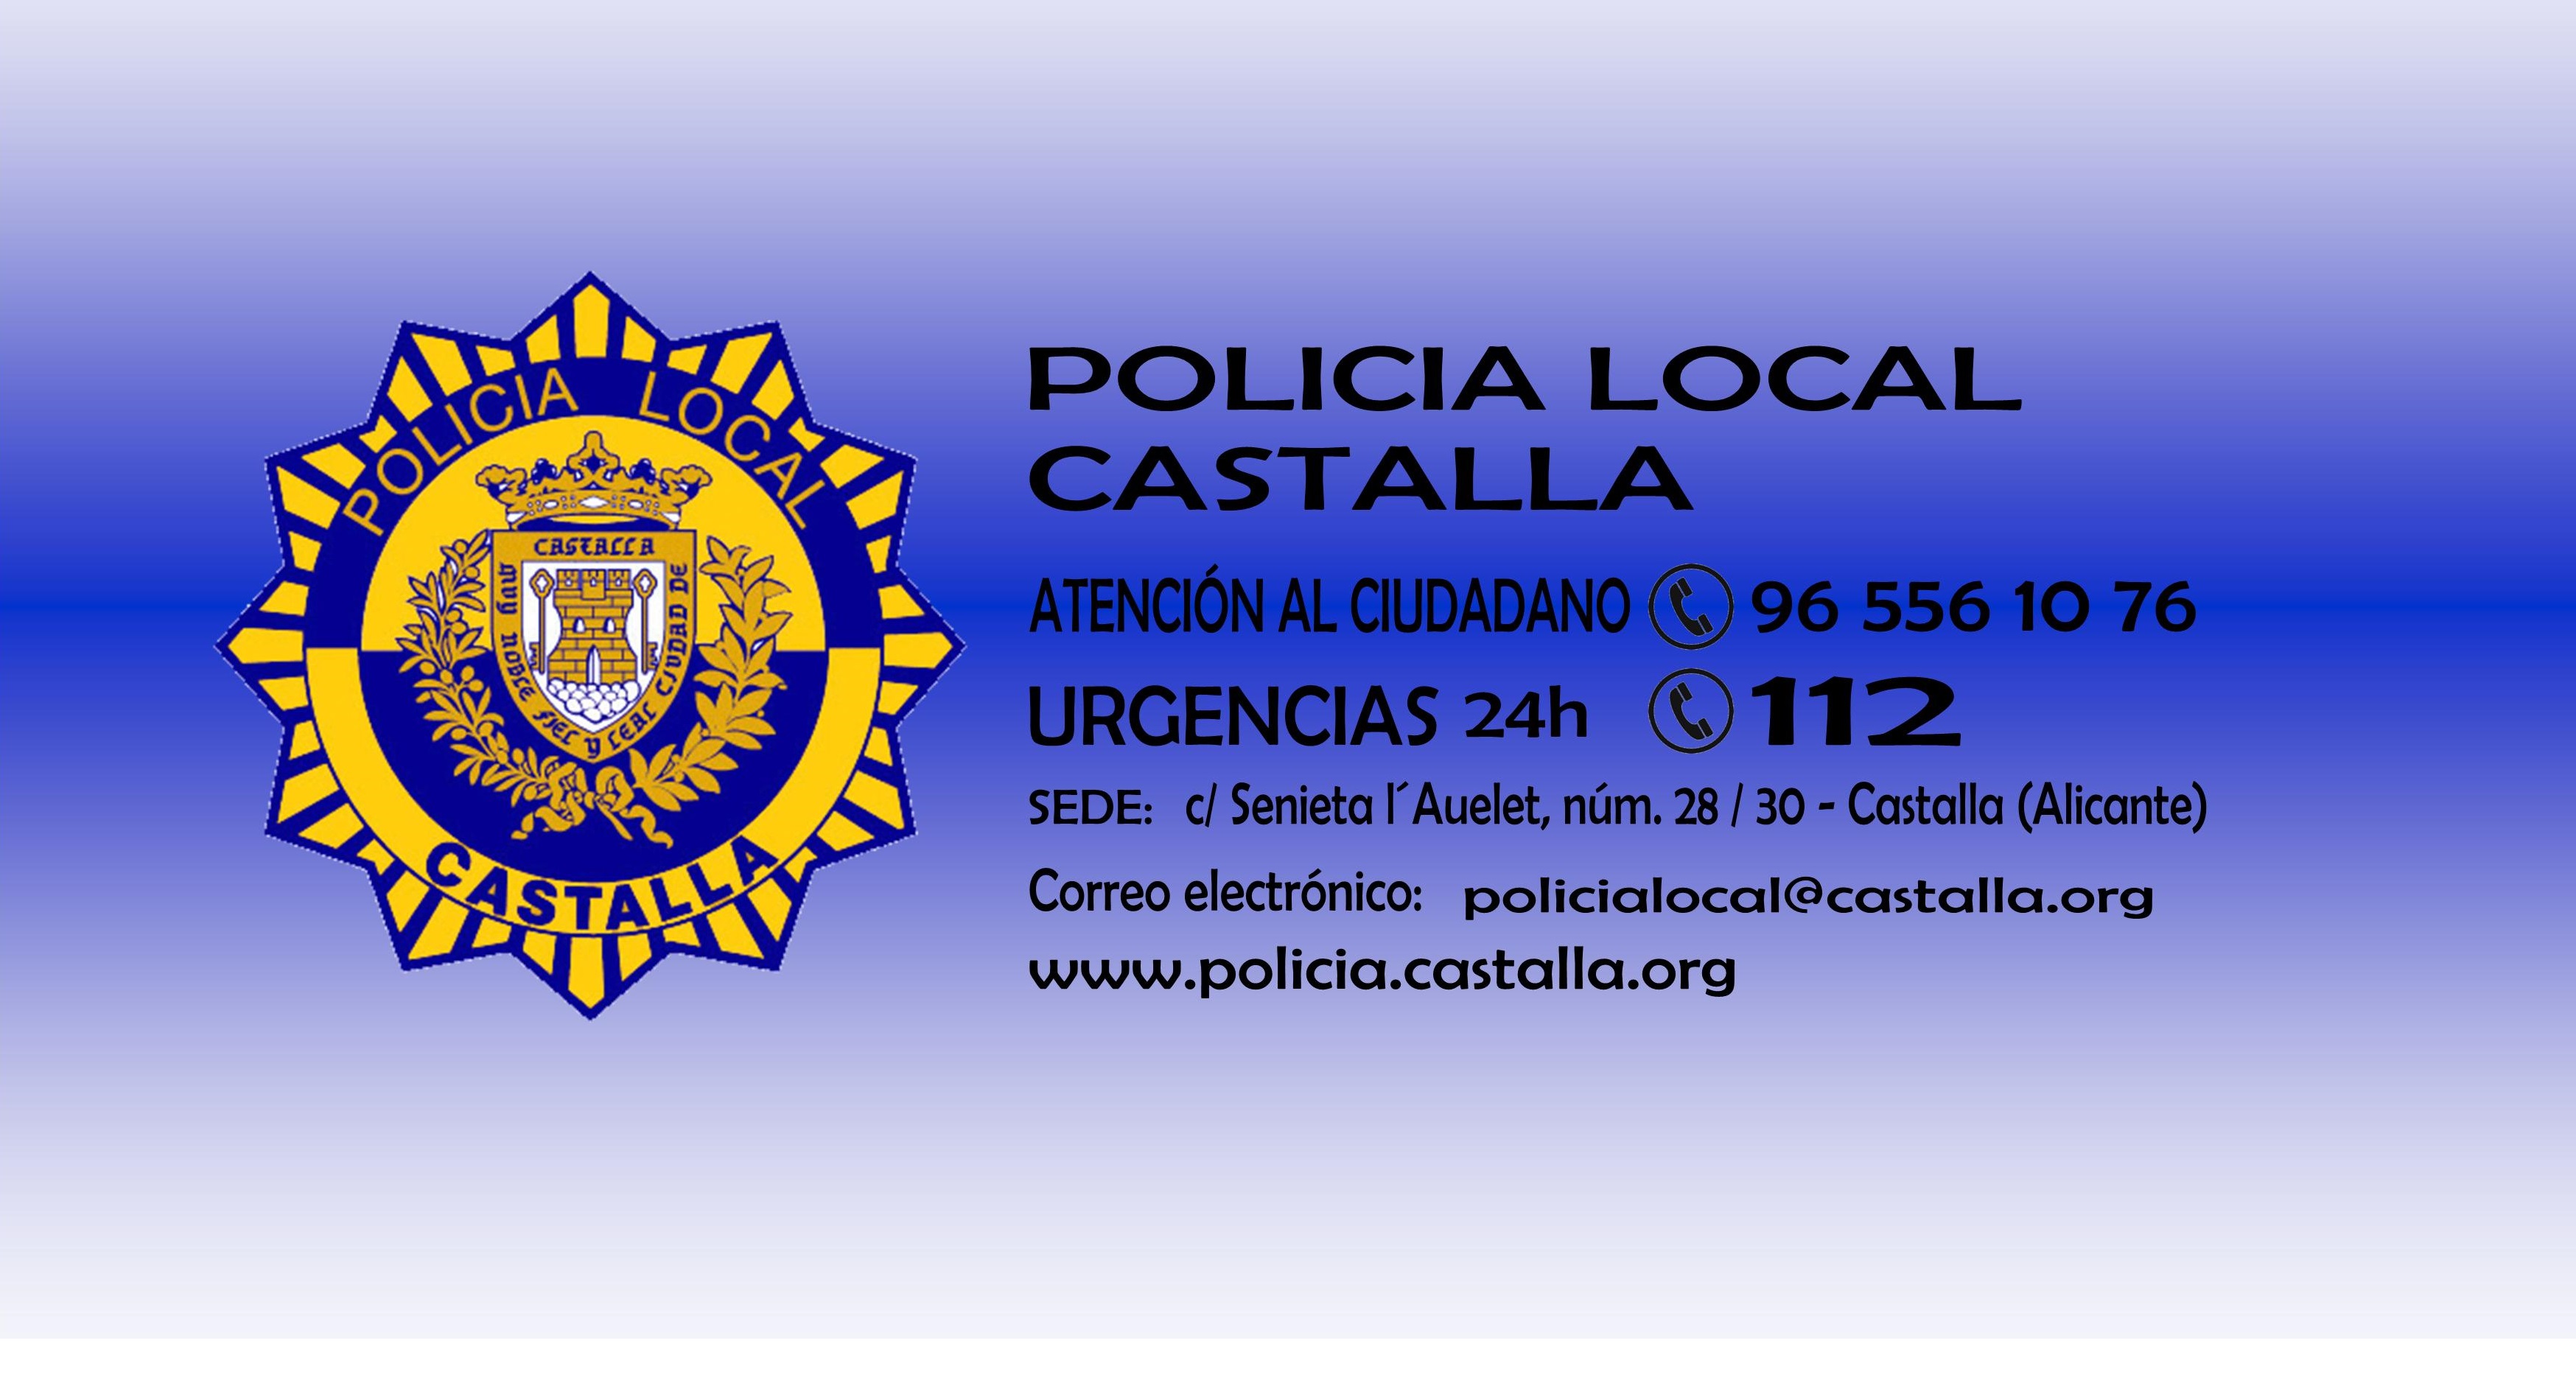 TELEFONOS1_POLICIA LOCAL CASTALLA